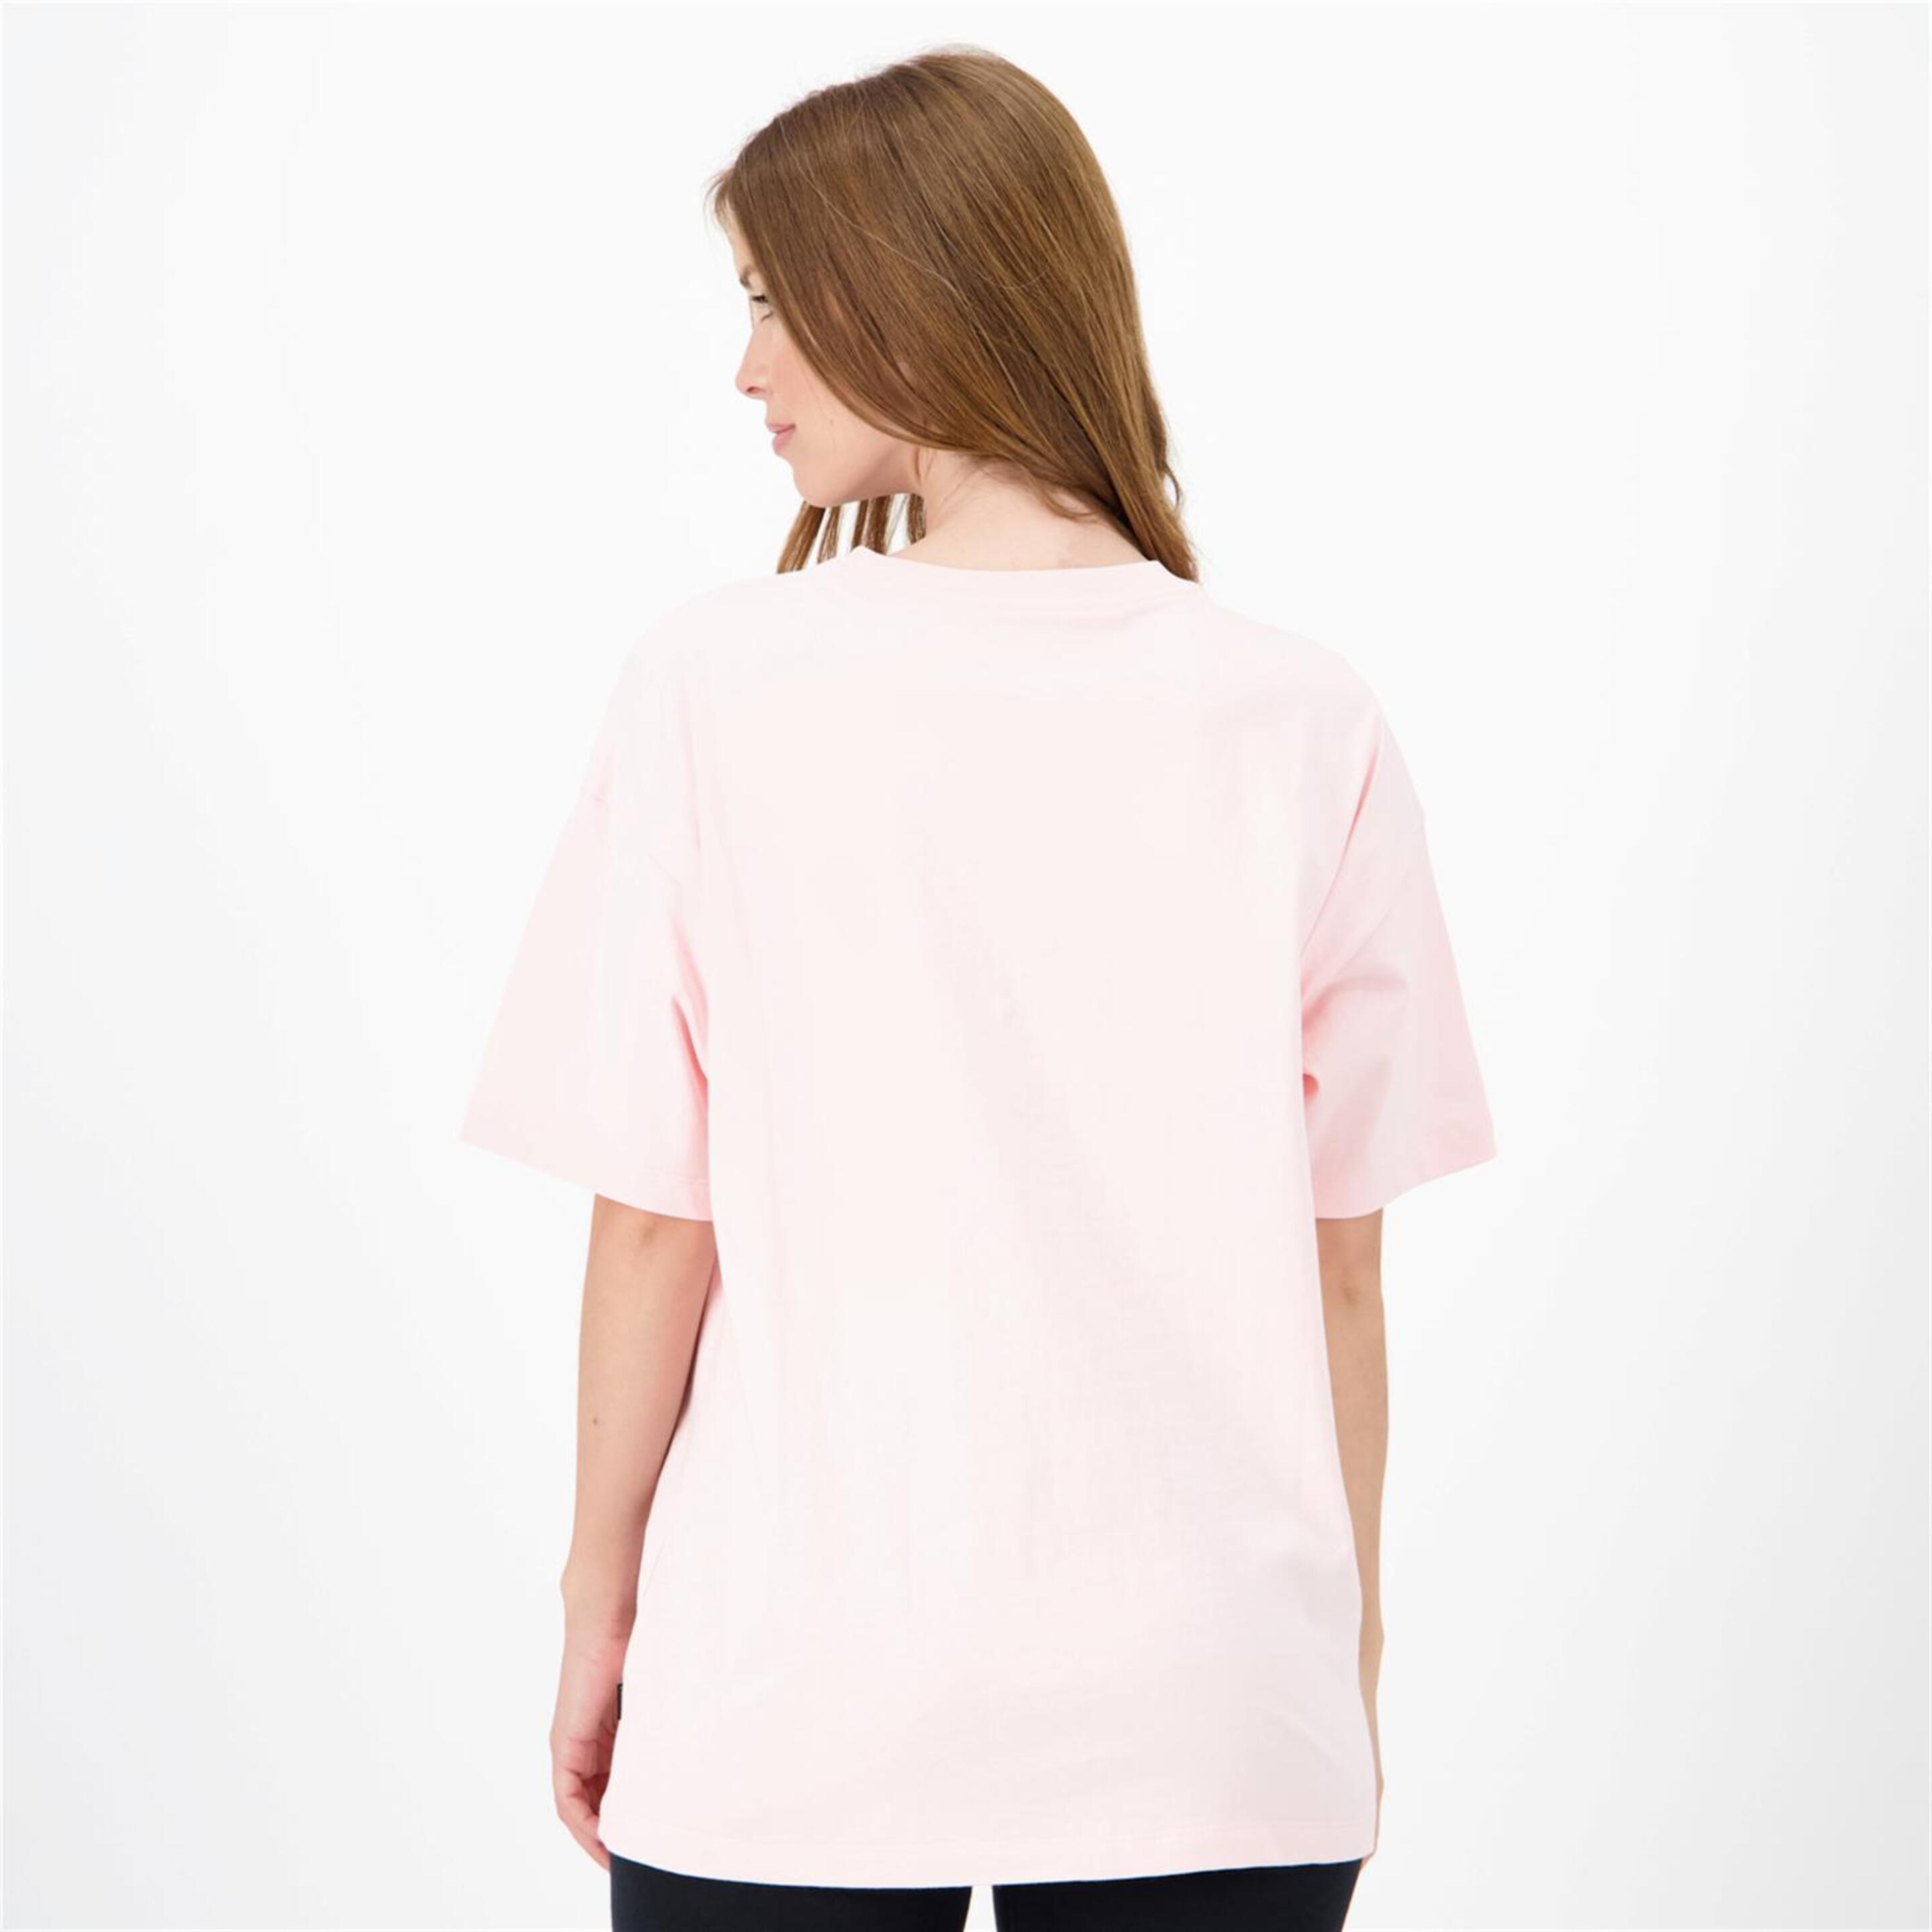 Converse Cherries - Rosa - Camiseta Mujer